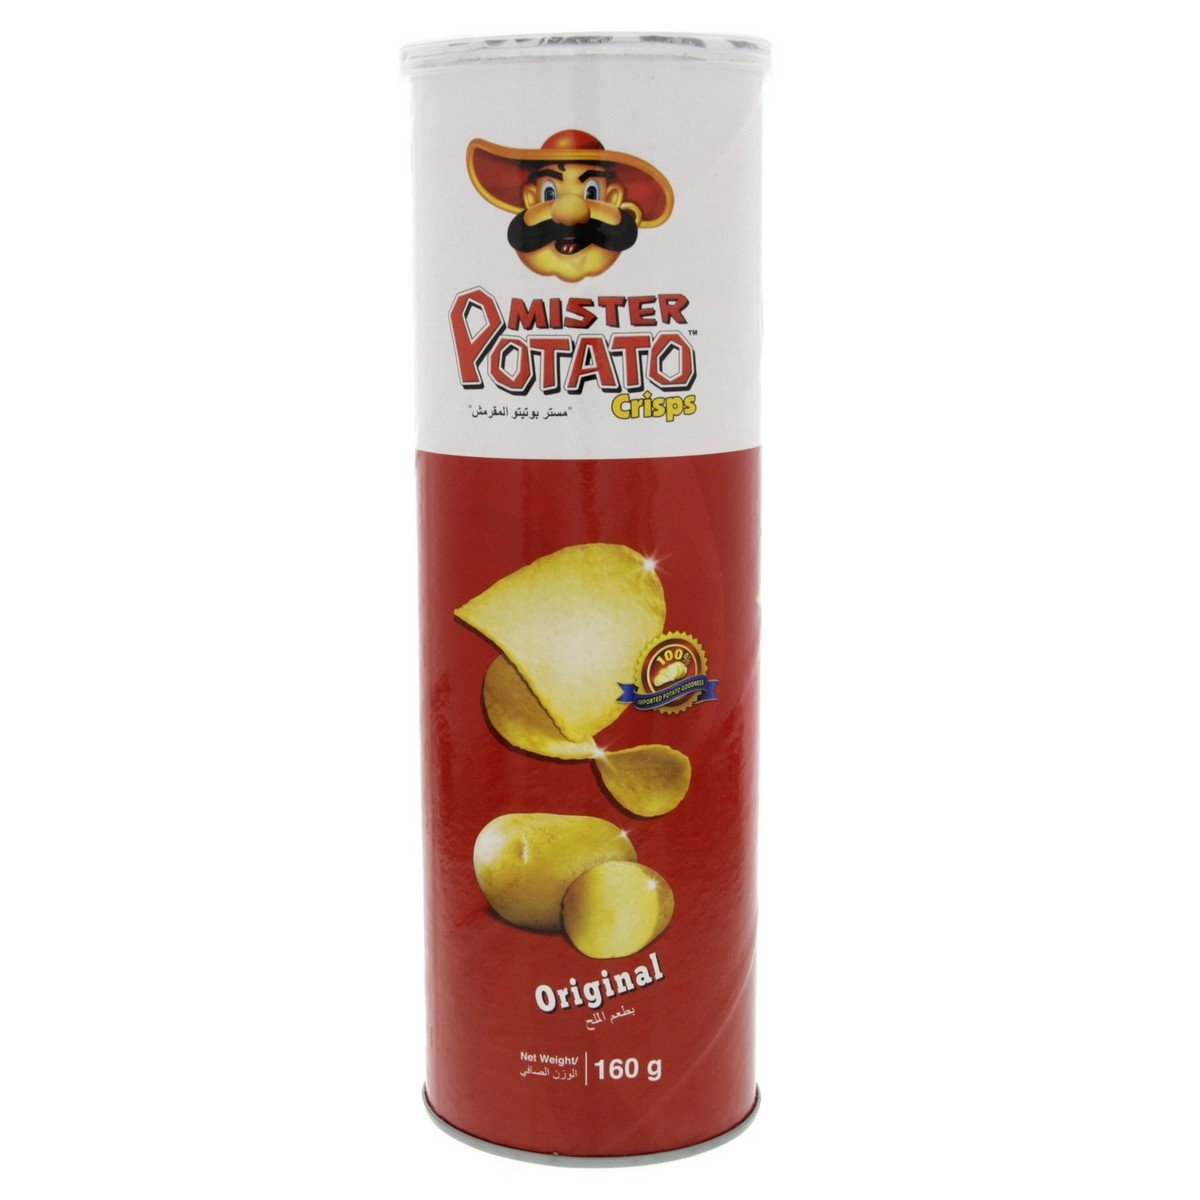 Mister Potato Crisps Original 160 g